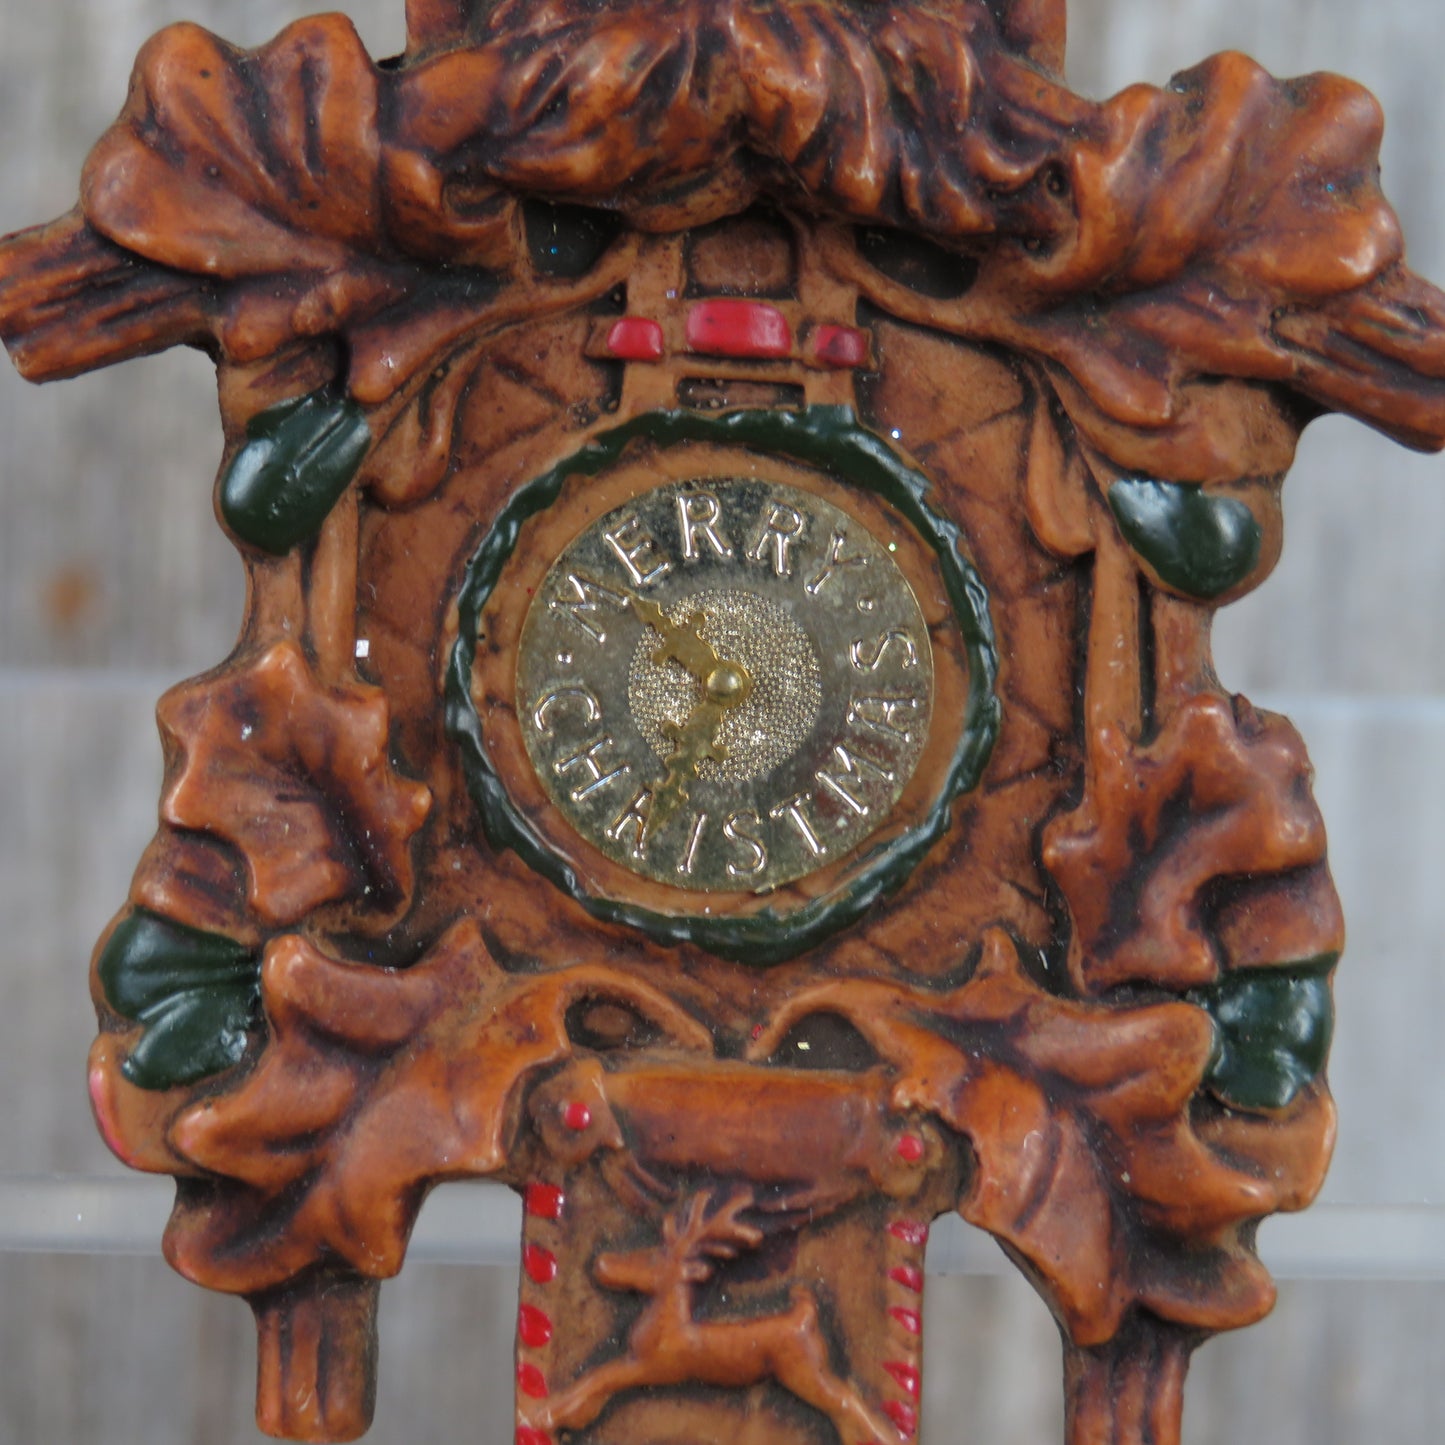 Vintage Clock Ornament Old World Cuckoo Hallmark Christmas 1984 Pinecone Chain - At Grandma's Table